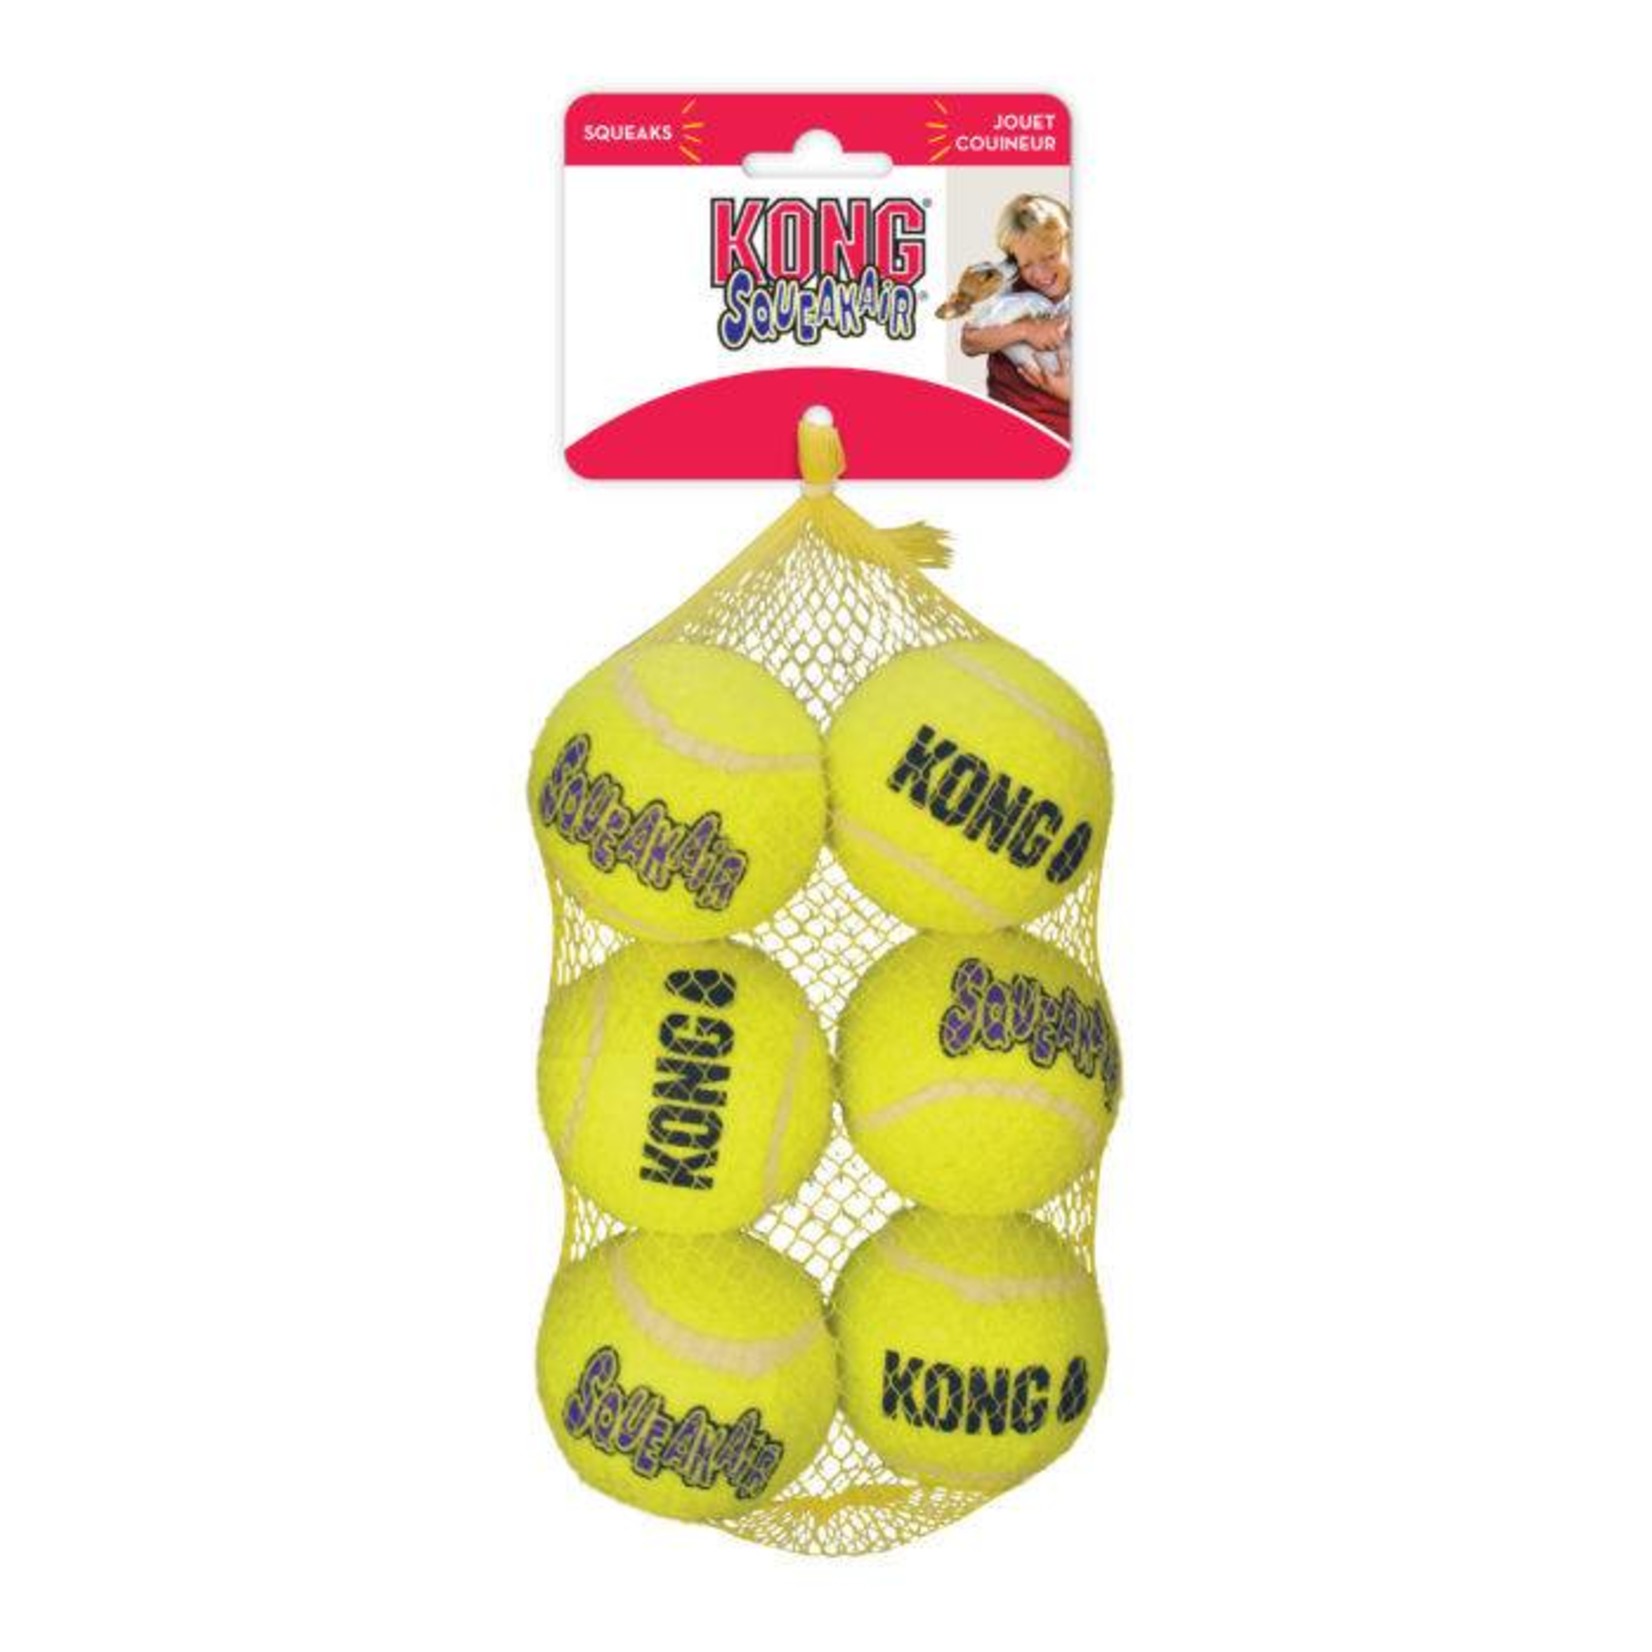 KONG AirDog Squeaker Tennis Ball Dog Toy, Medium, 6 Pack